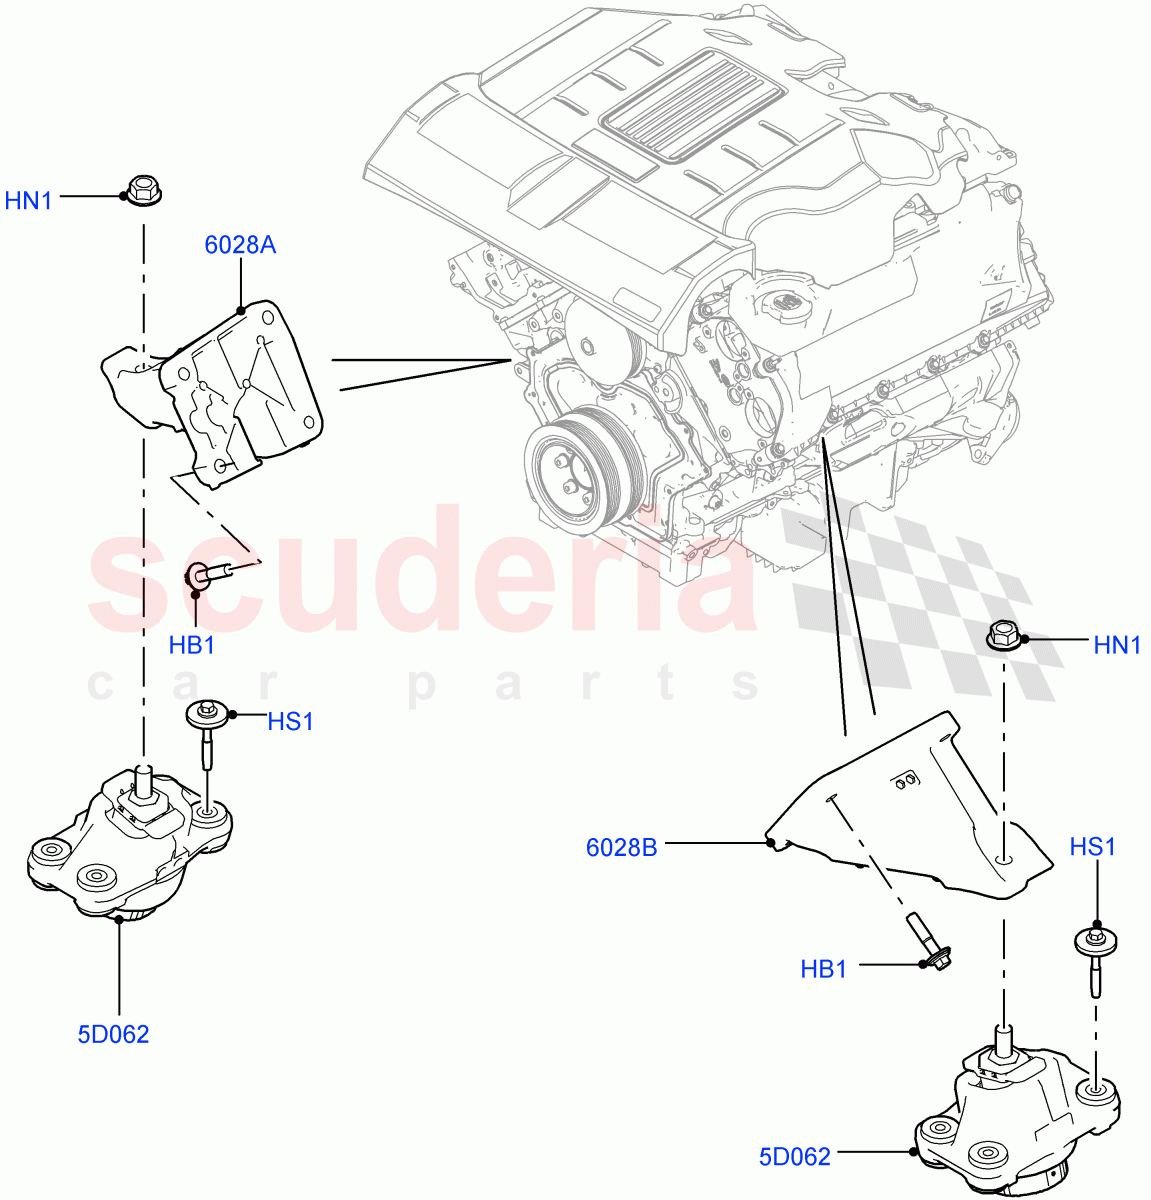 Engine Mounting(3.0L DOHC GDI SC V6 PETROL,5.0L OHC SGDI SC V8 Petrol - AJ133,5.0 Petrol AJ133 DOHC CDA,5.0L P AJ133 DOHC CDA S/C Enhanced) of Land Rover Land Rover Range Rover Sport (2014+) [3.0 I6 Turbo Diesel AJ20D6]